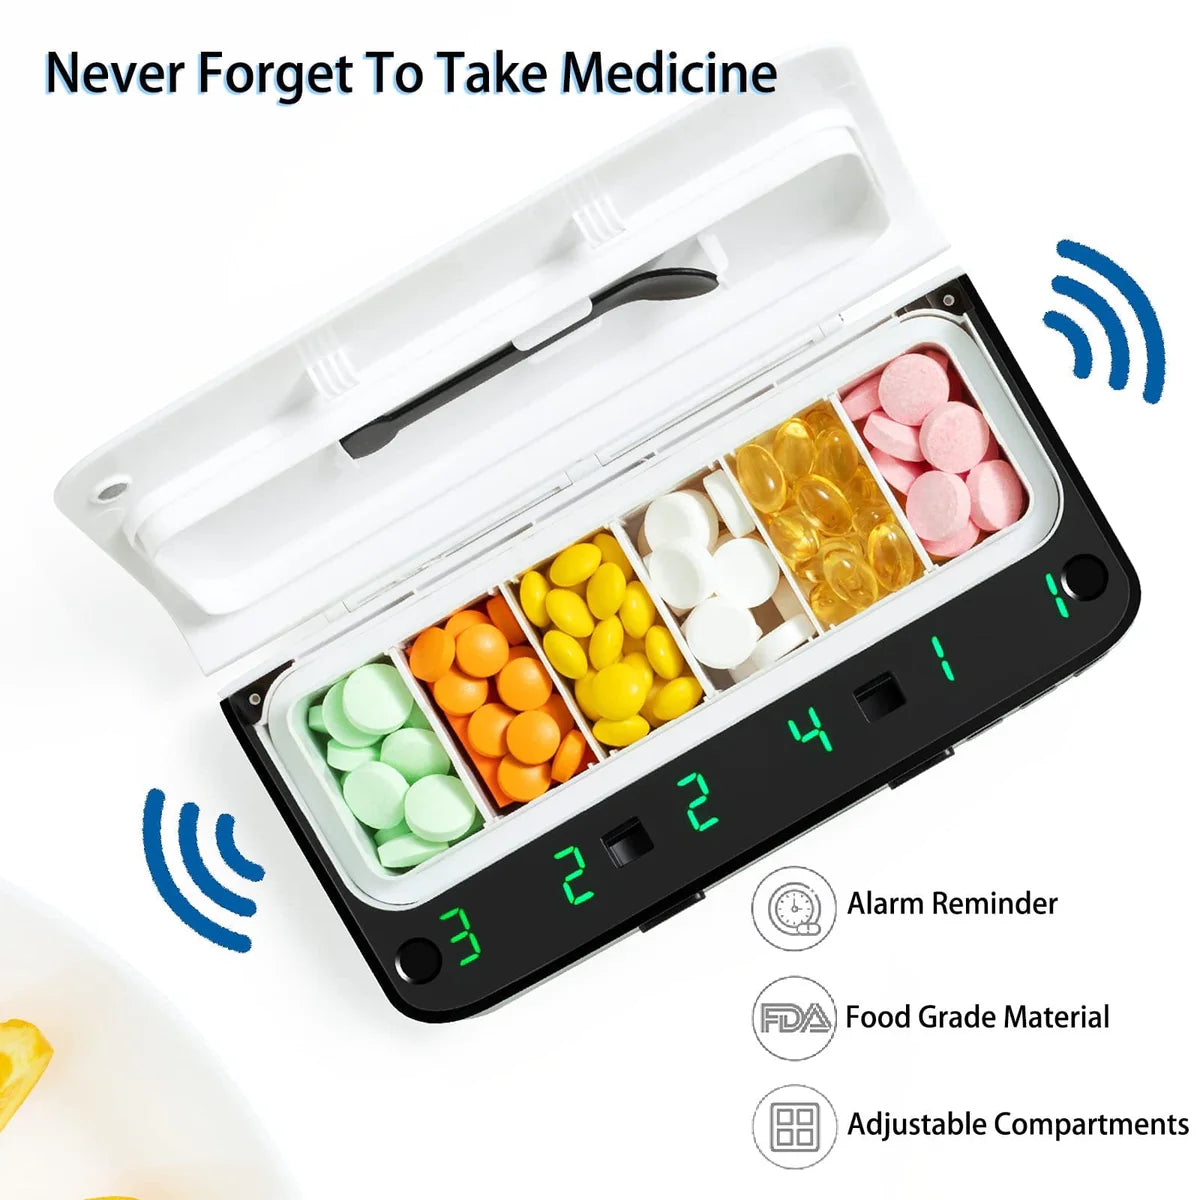 The Smart Medicine Box: Revolutionizing Medication Management